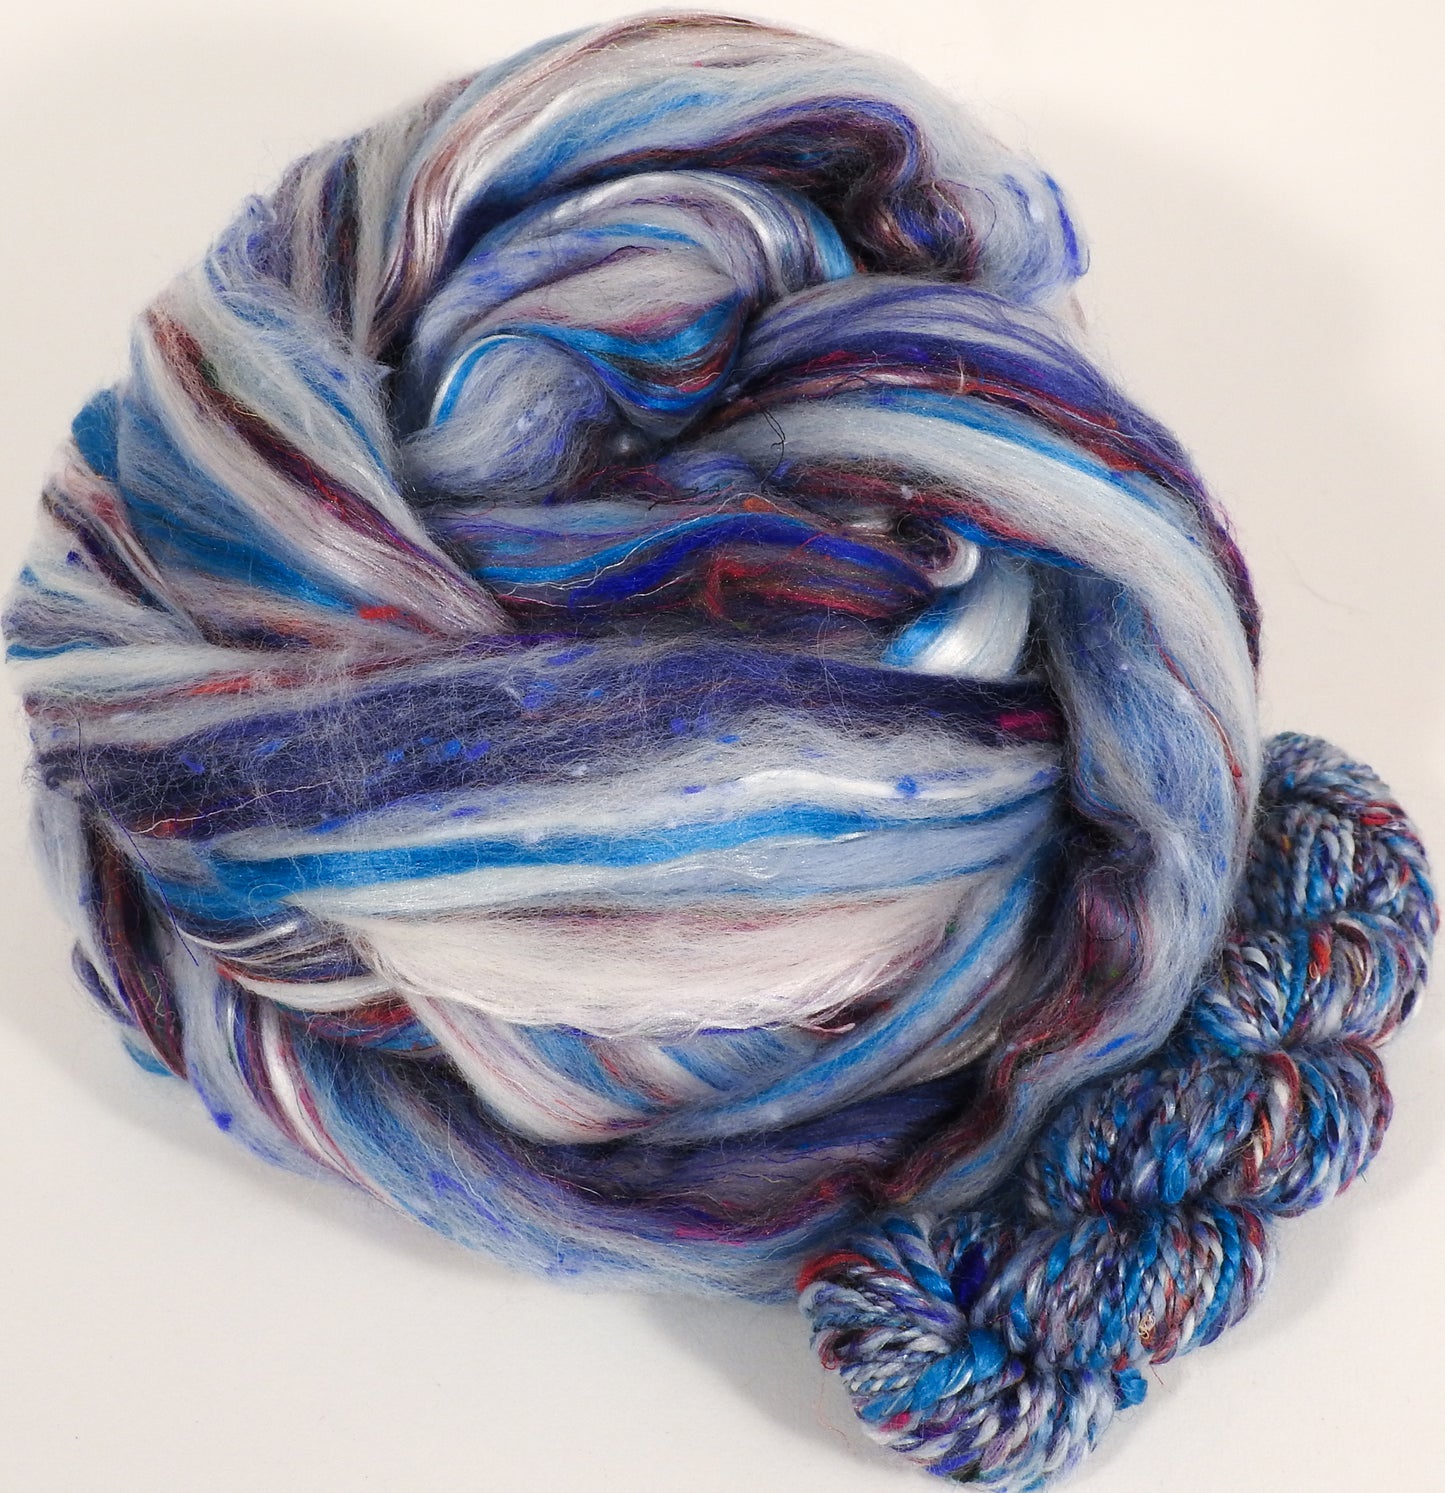 Blue Willow Teacup - Custom Blended Top - Superfine Merino/Mulberry Silk Bamboo/Sari Silk/Tweed Blend (40/25/15/10/10) - Inglenook Fibers